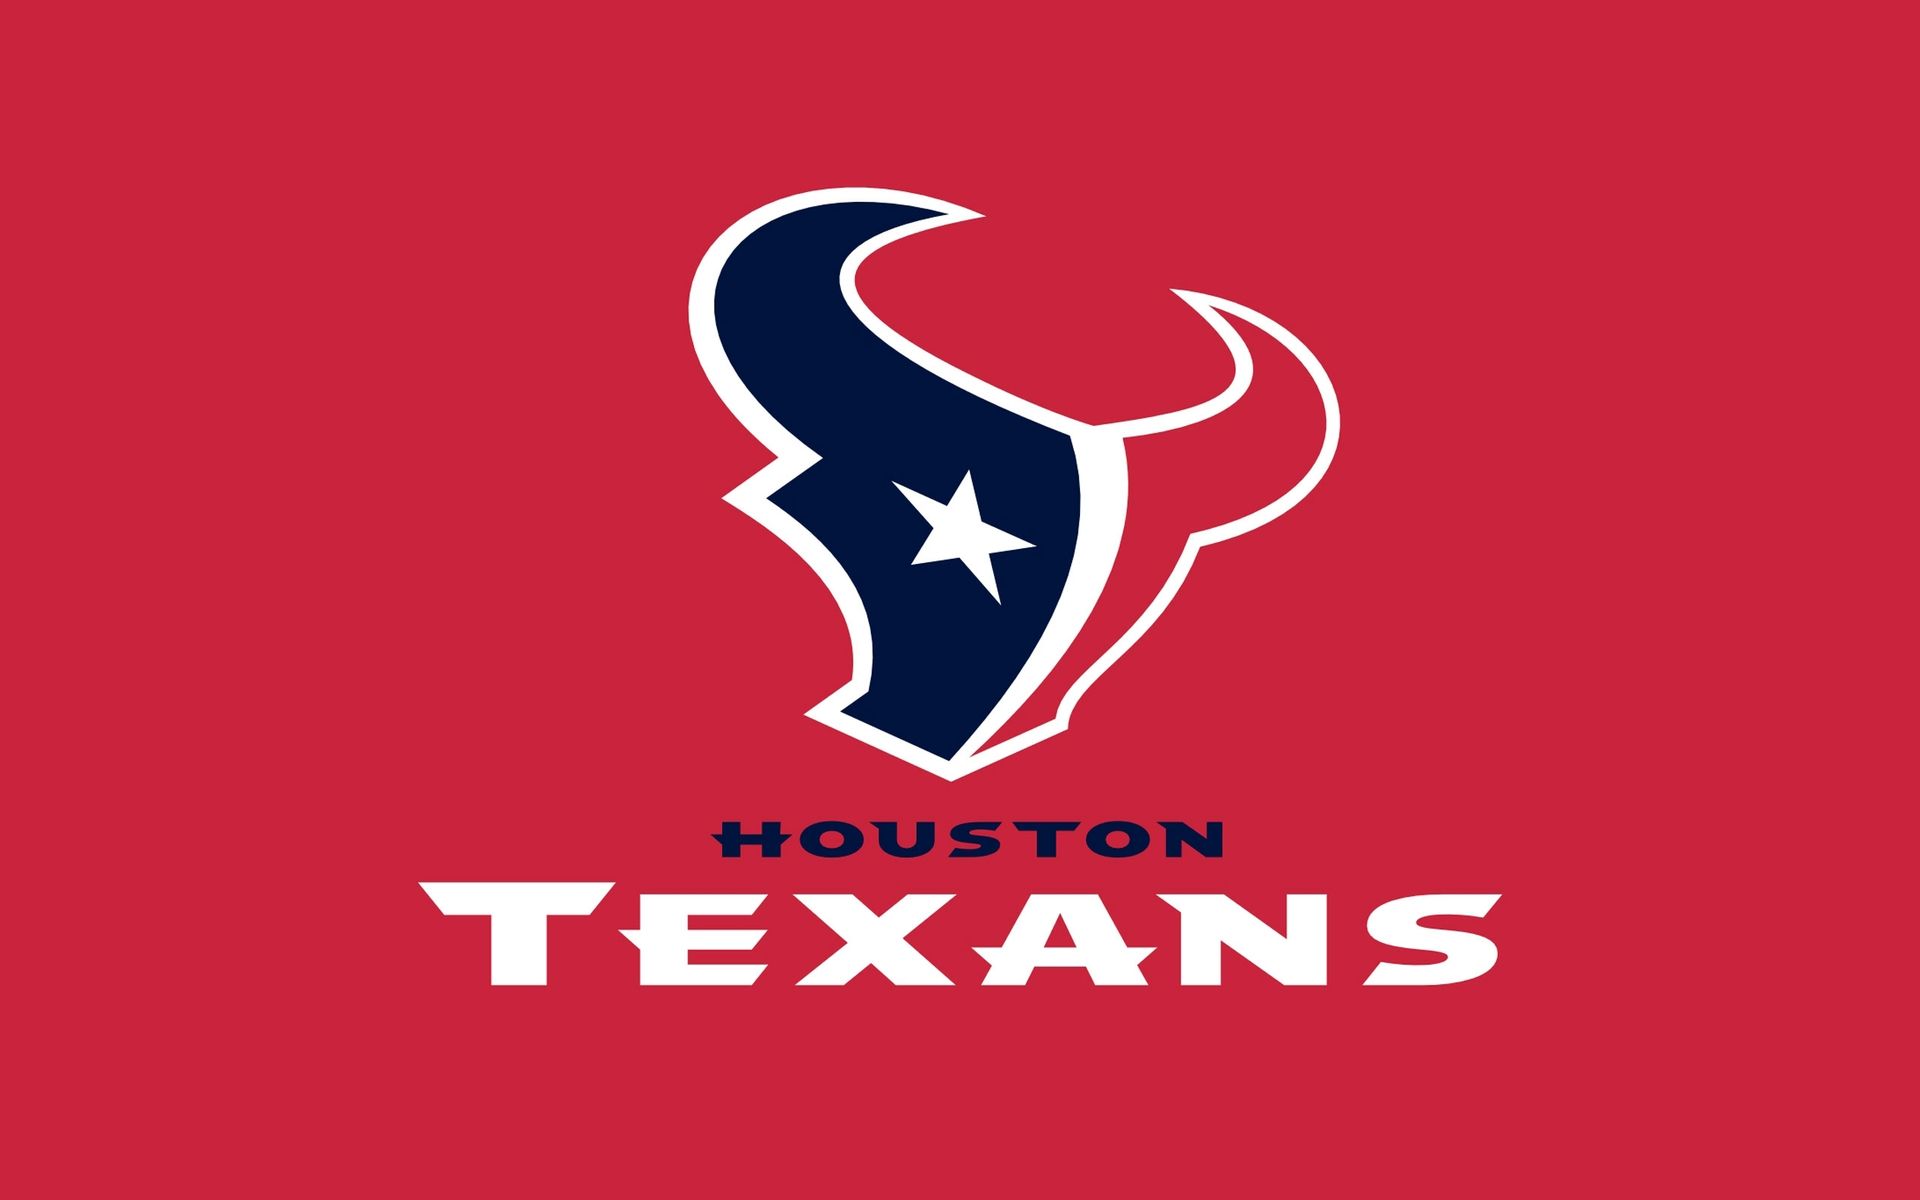 Houston Texans Wallpaper Full HD Search